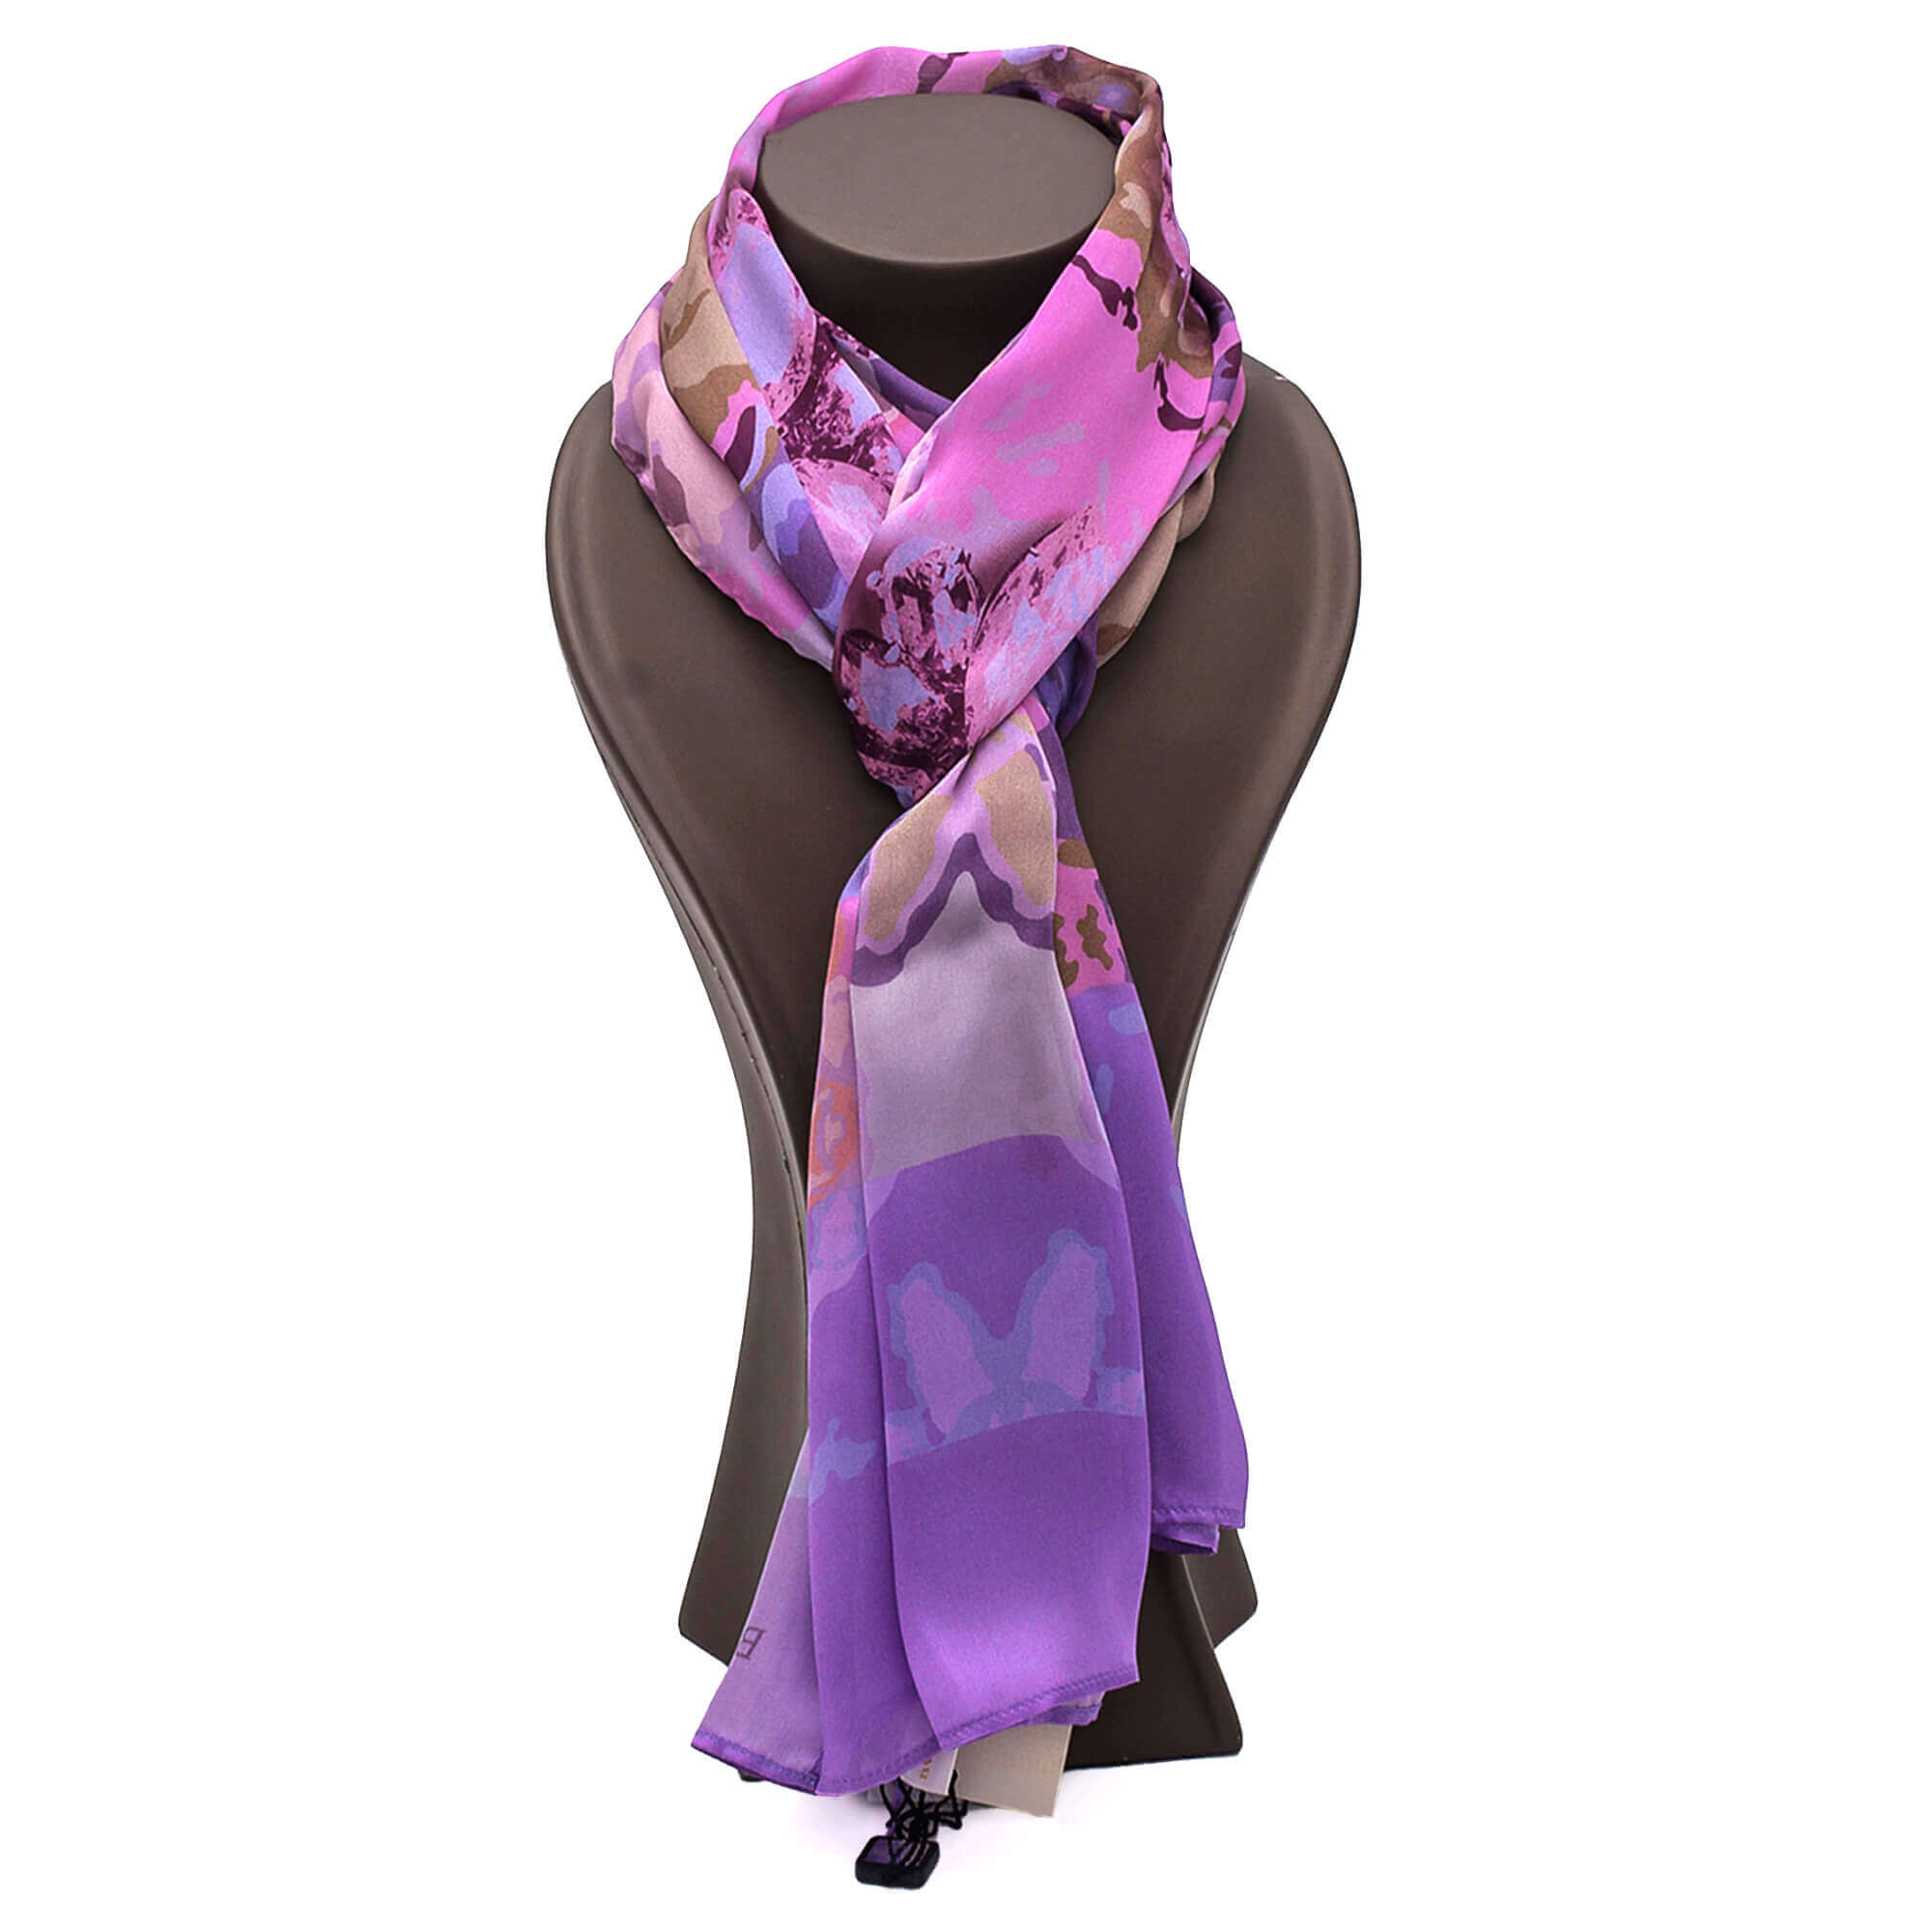 Bvlgari - Purple Silk Floral Print Shawl